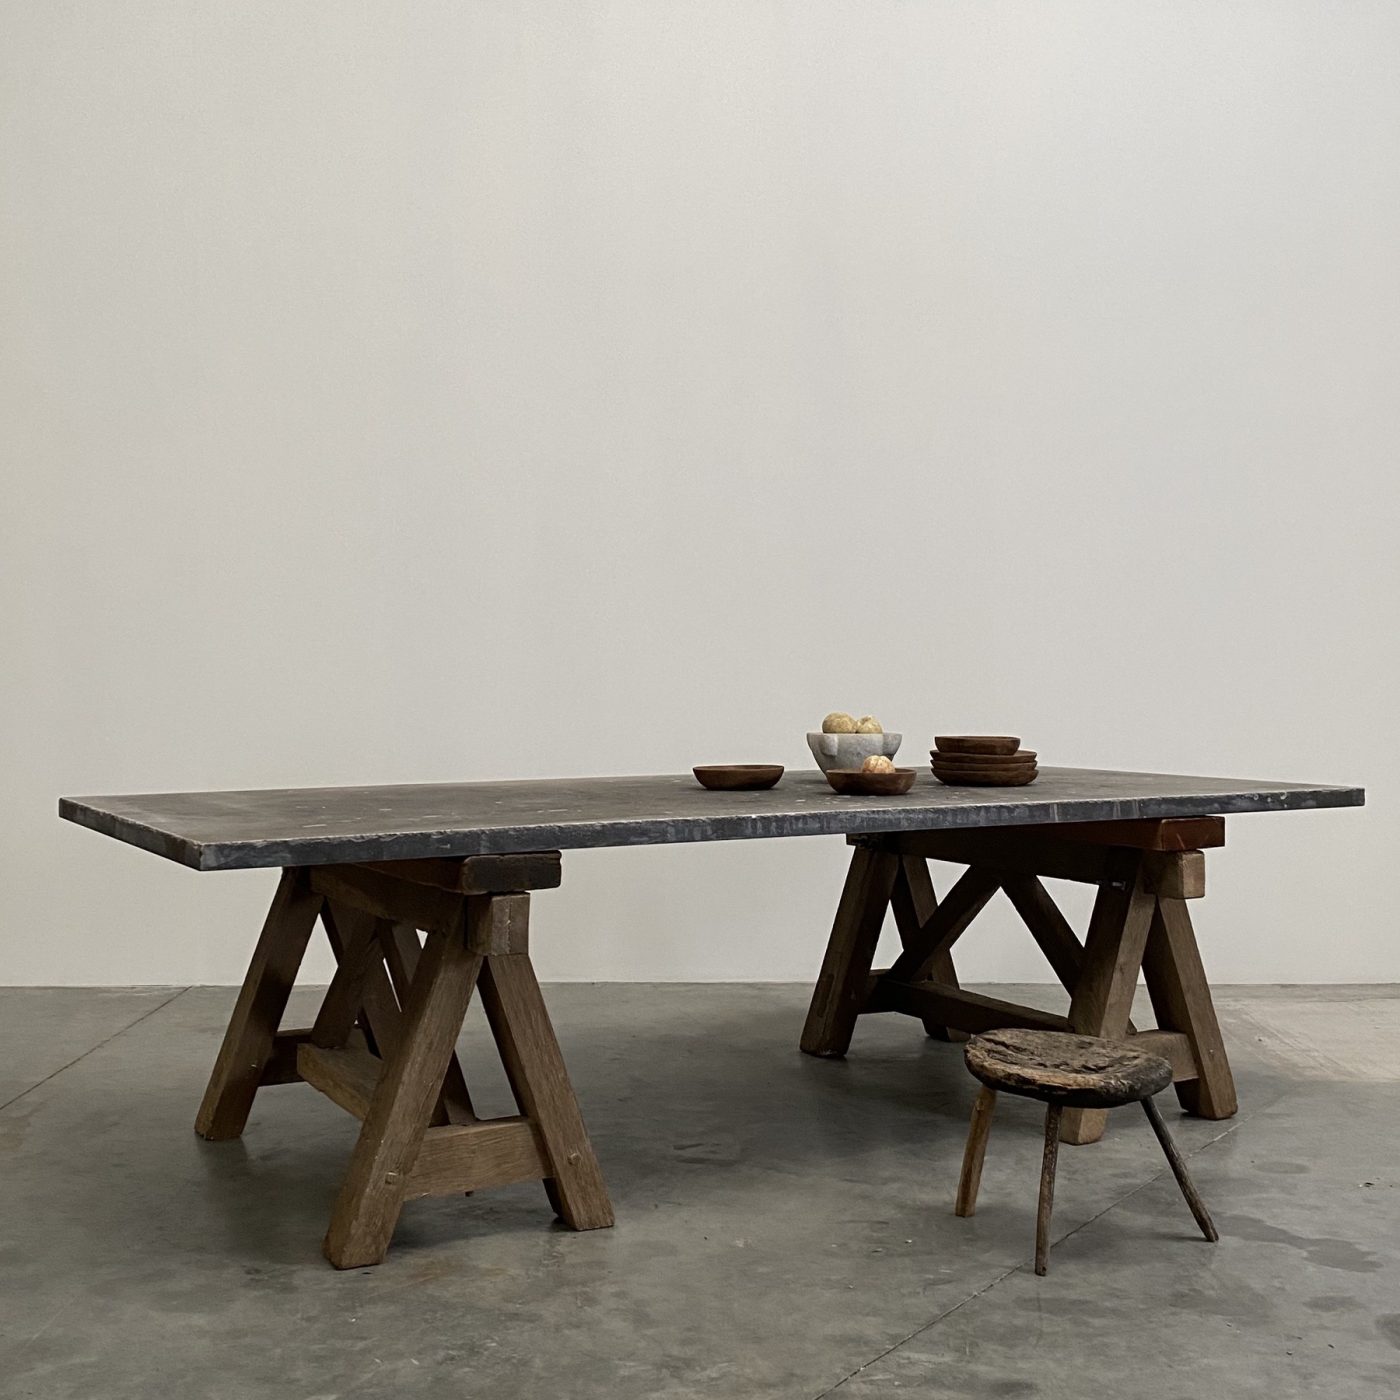 objet-vagabond-stone-table0006